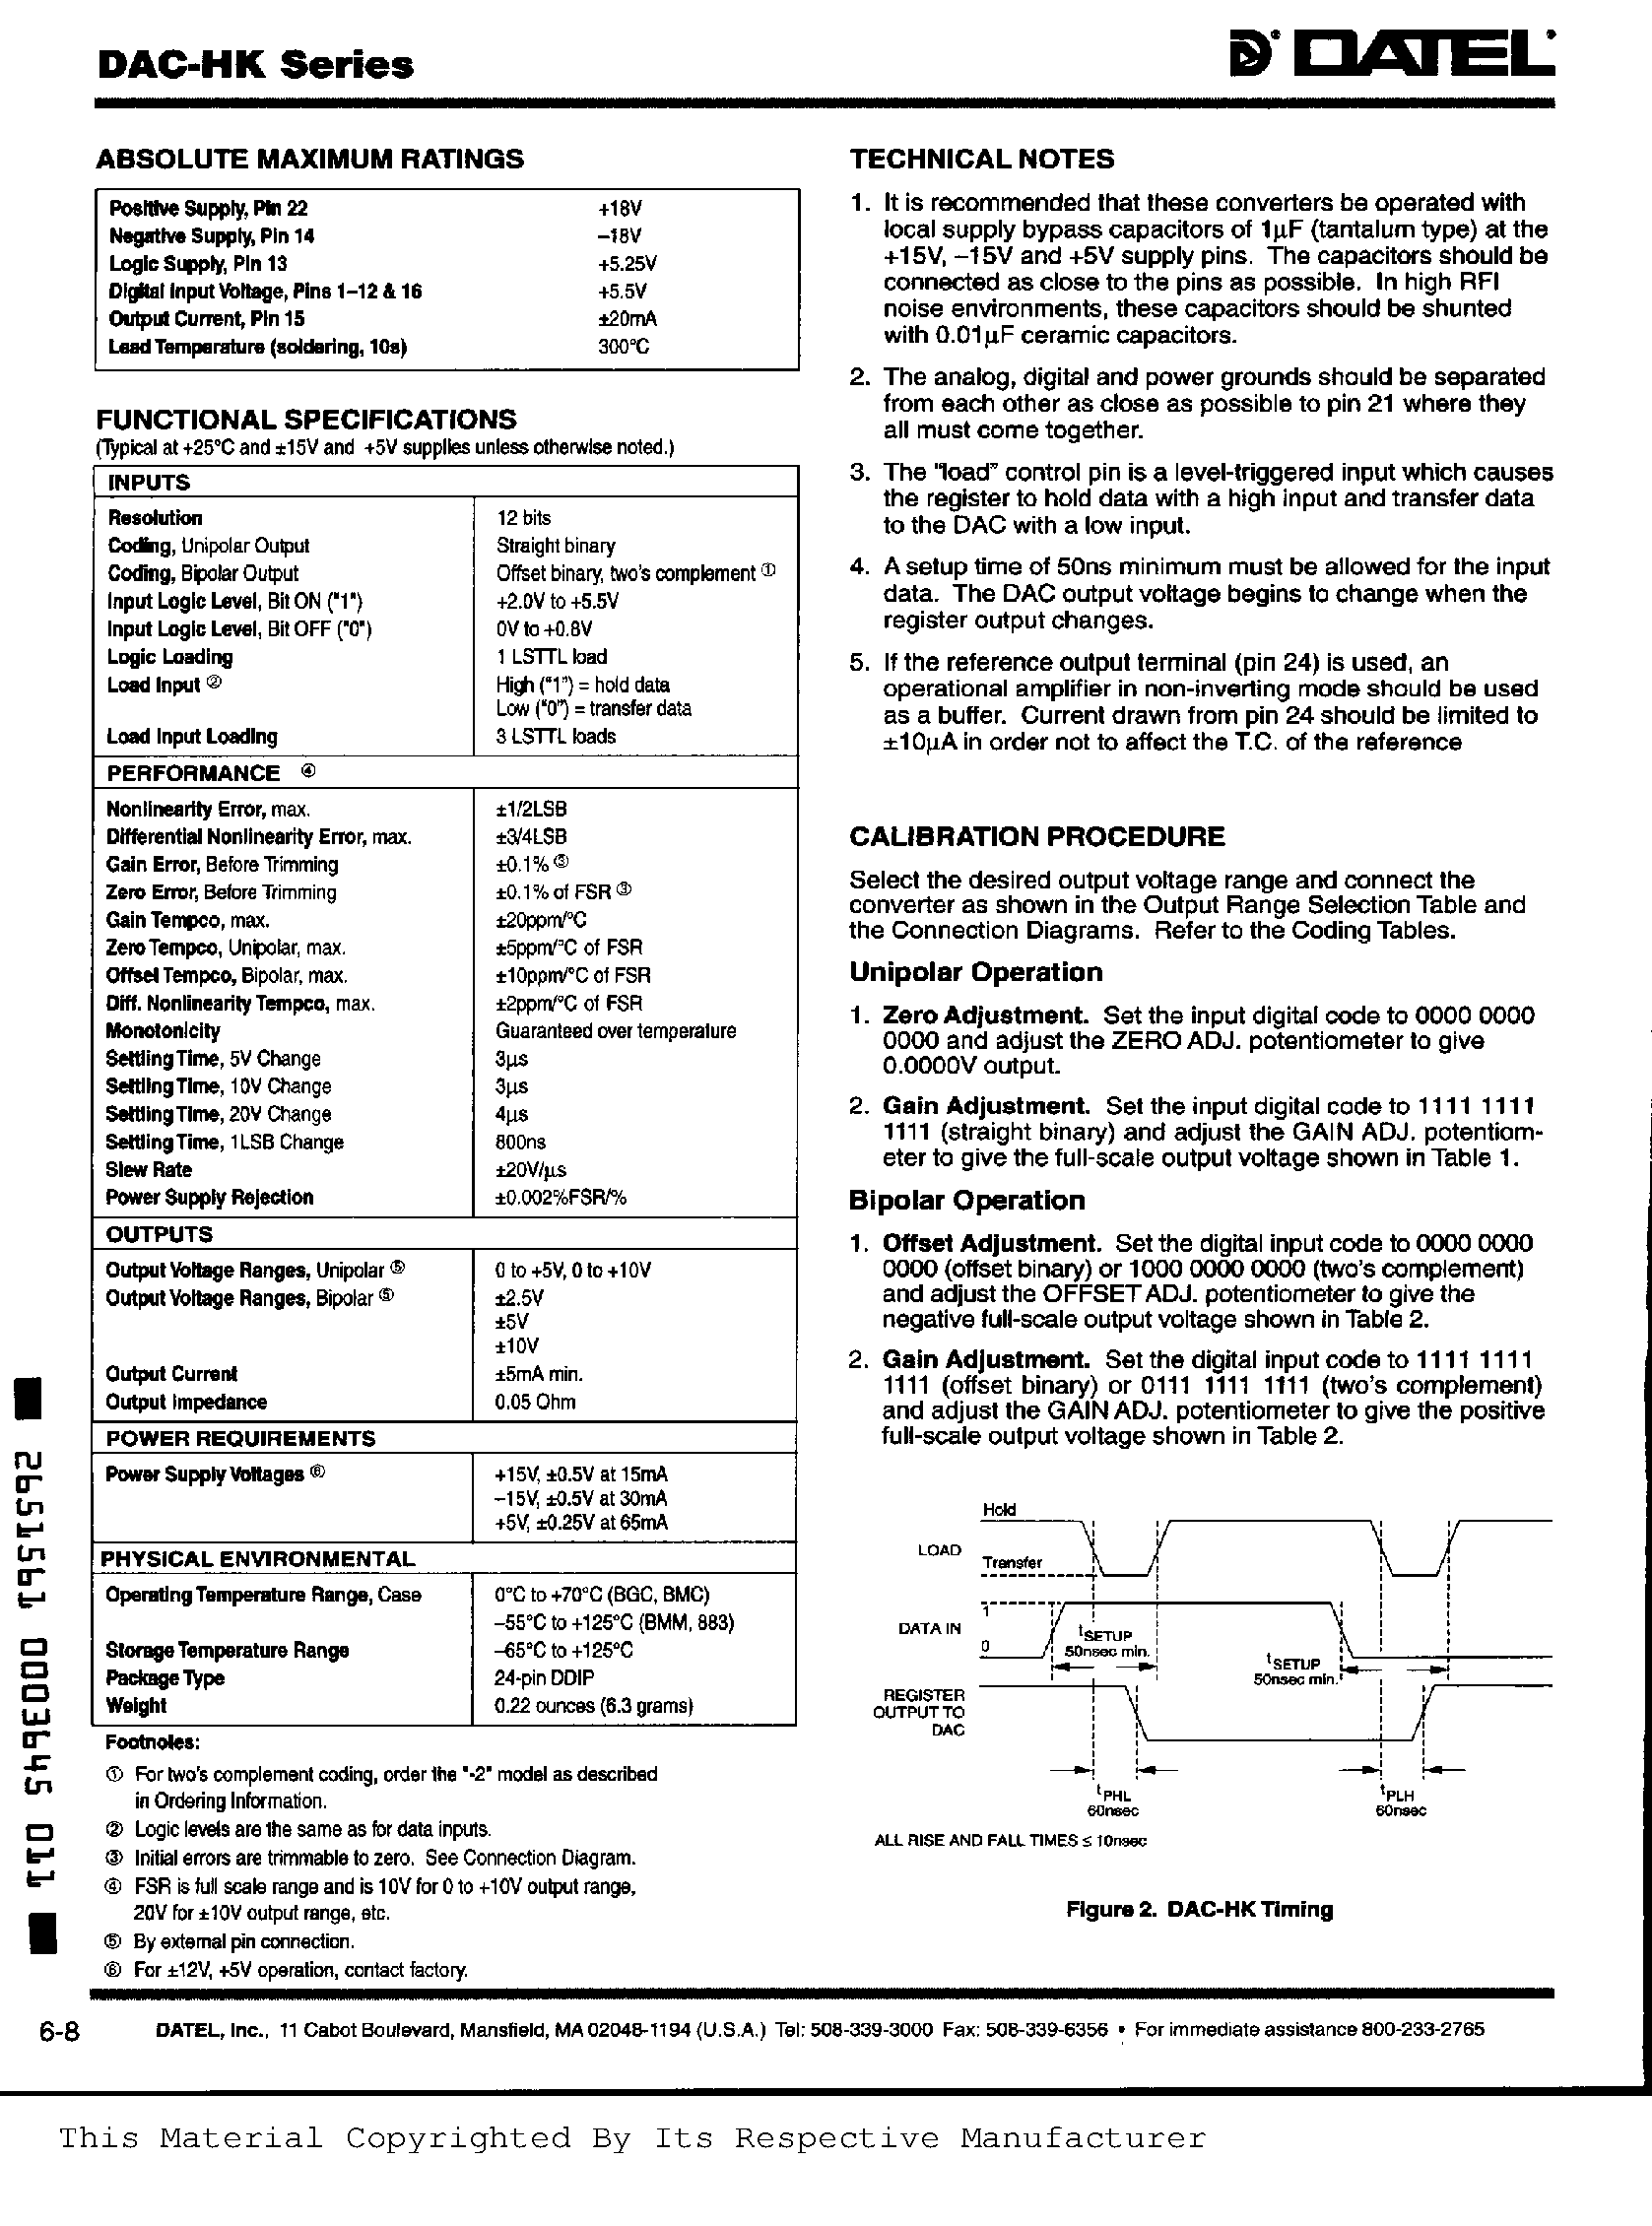 Datasheet DAC-HKB-2/833 - HIGH PERFORMANCE 12 BIT DAC WITH INPUT REGISTERS page 2